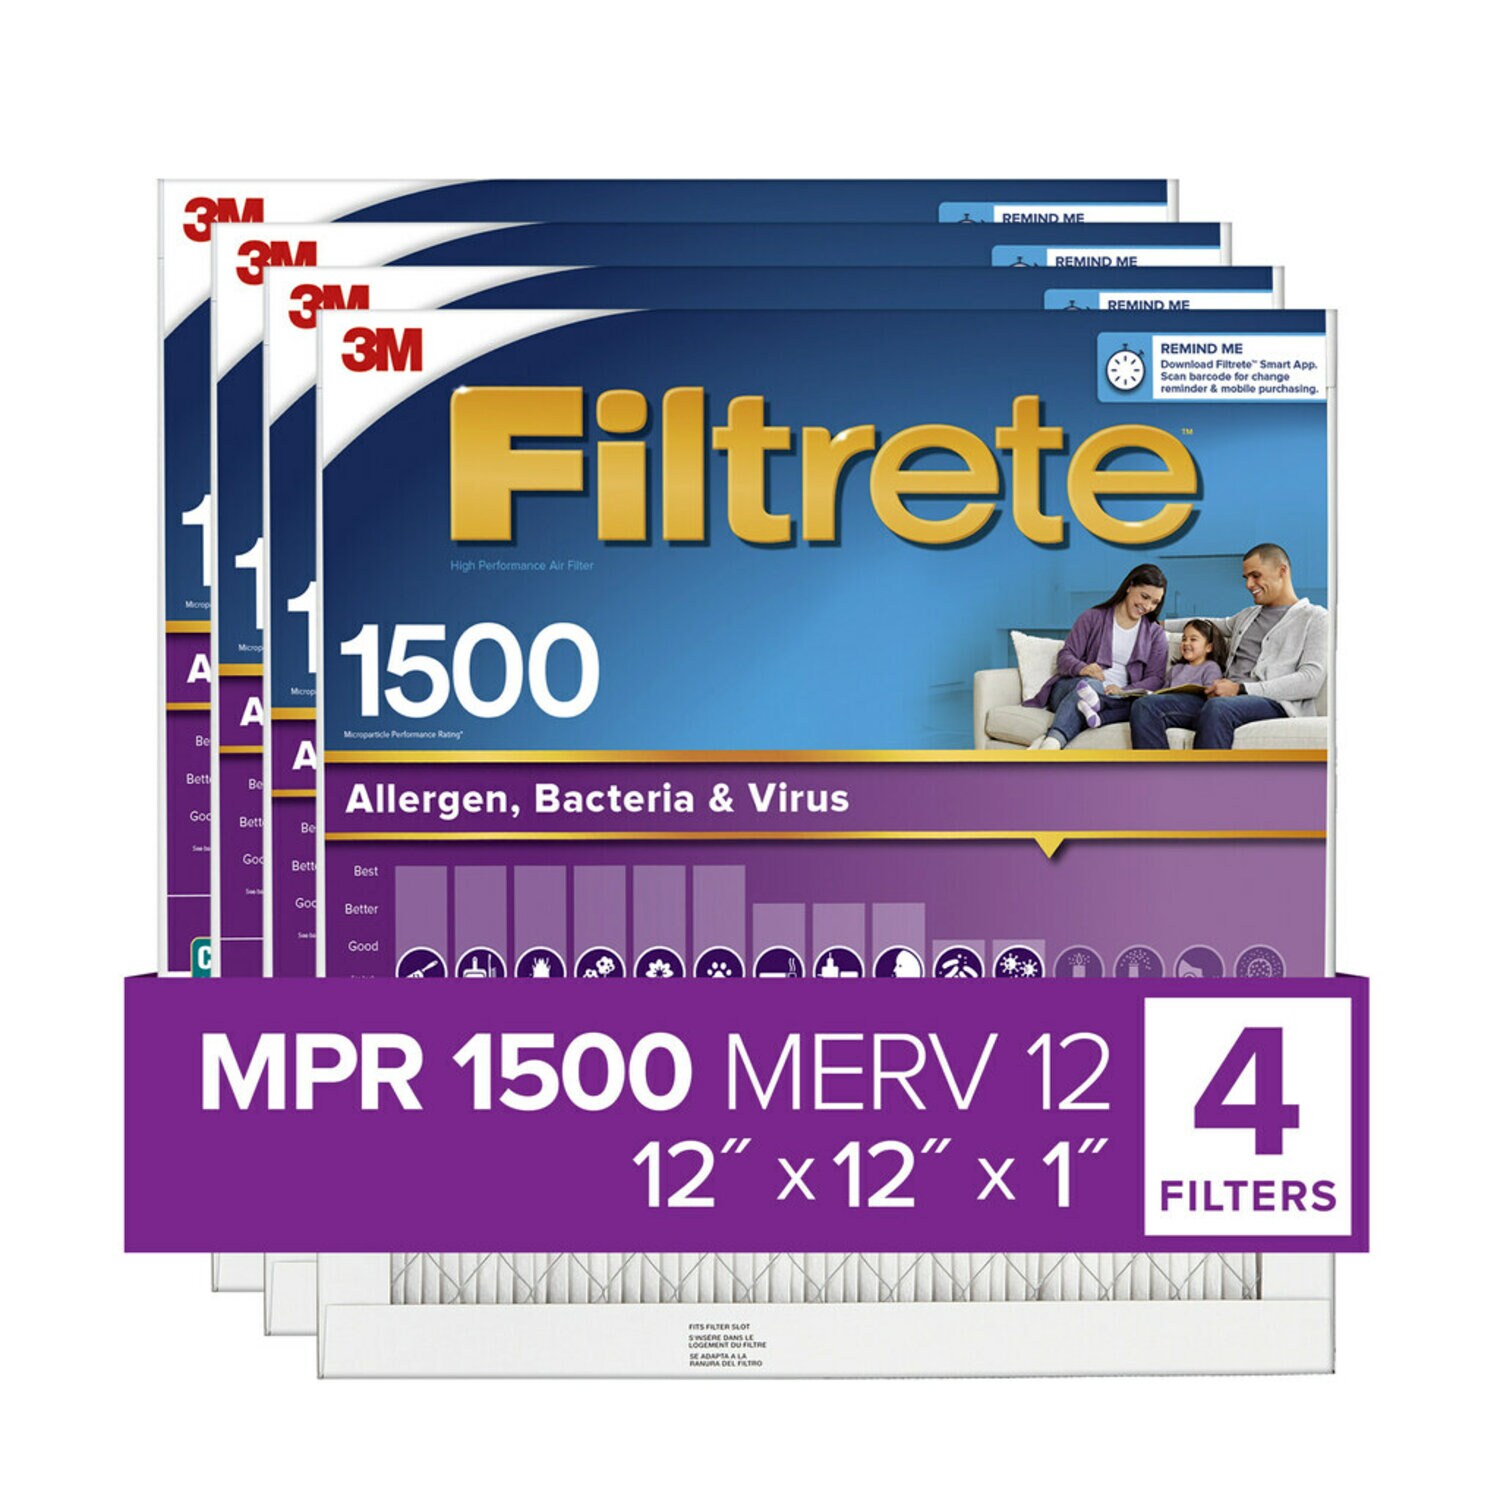 7100188735 - Filtrete Allergen, Bacteria & Virus Air Filter, 1500 MPR, 2010-4, 12 in x 12 in x 1 in (30,4 cm x 30,4 cm x 2,5 cm)